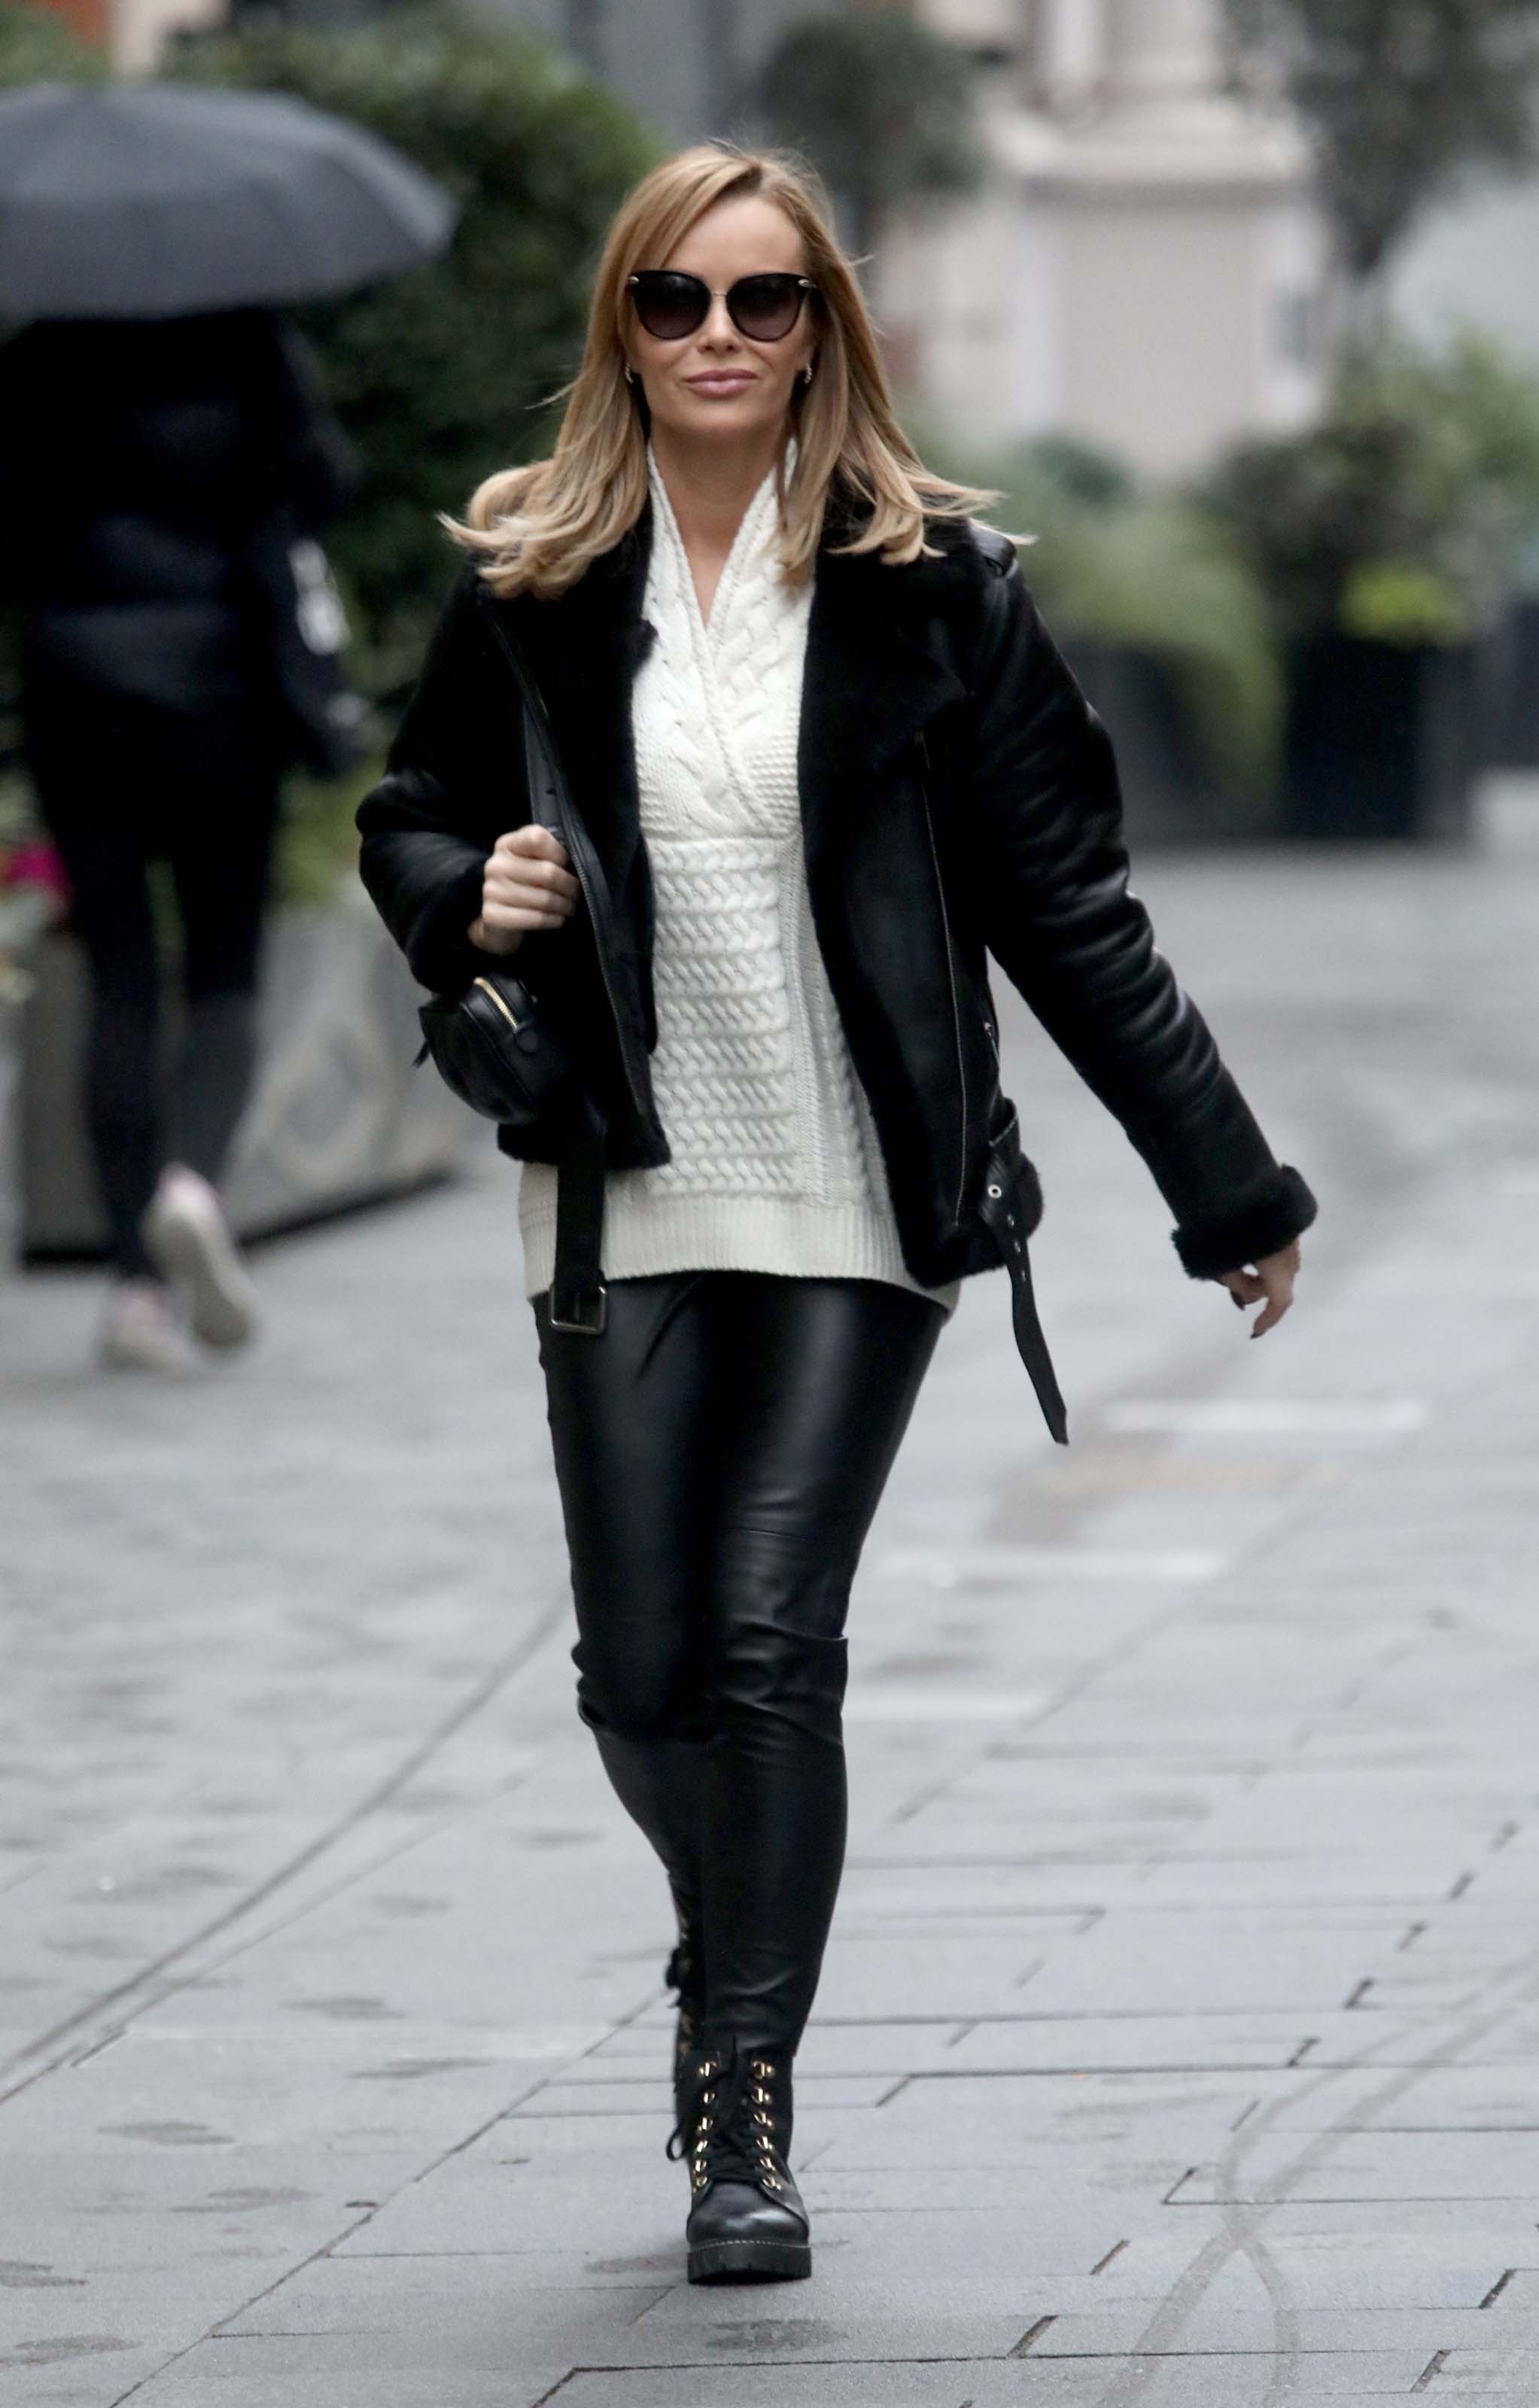 Amanda Holden leaving Global Radio in London